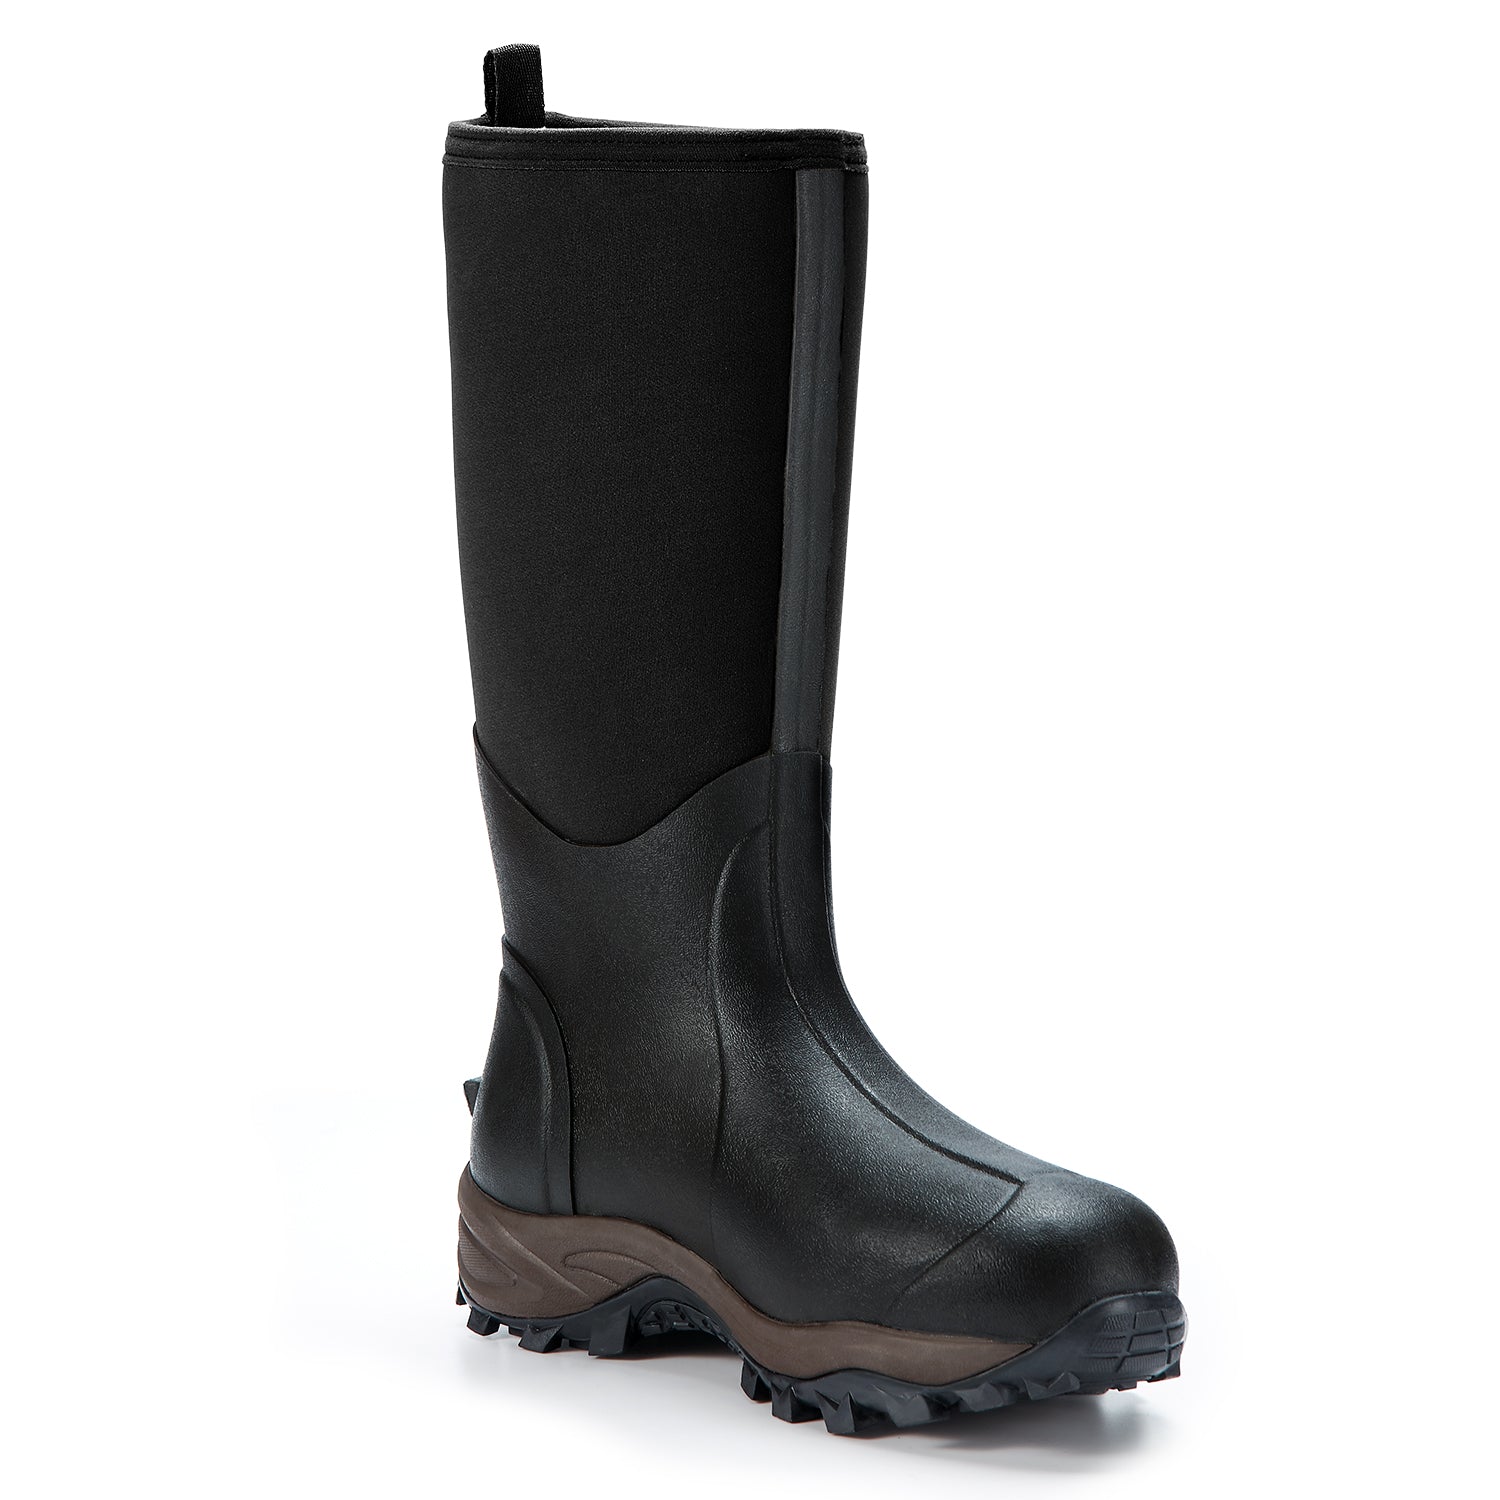 Rubber Neoprene Boots Waterproof Hunting Boots - M12 / Black - TideWe